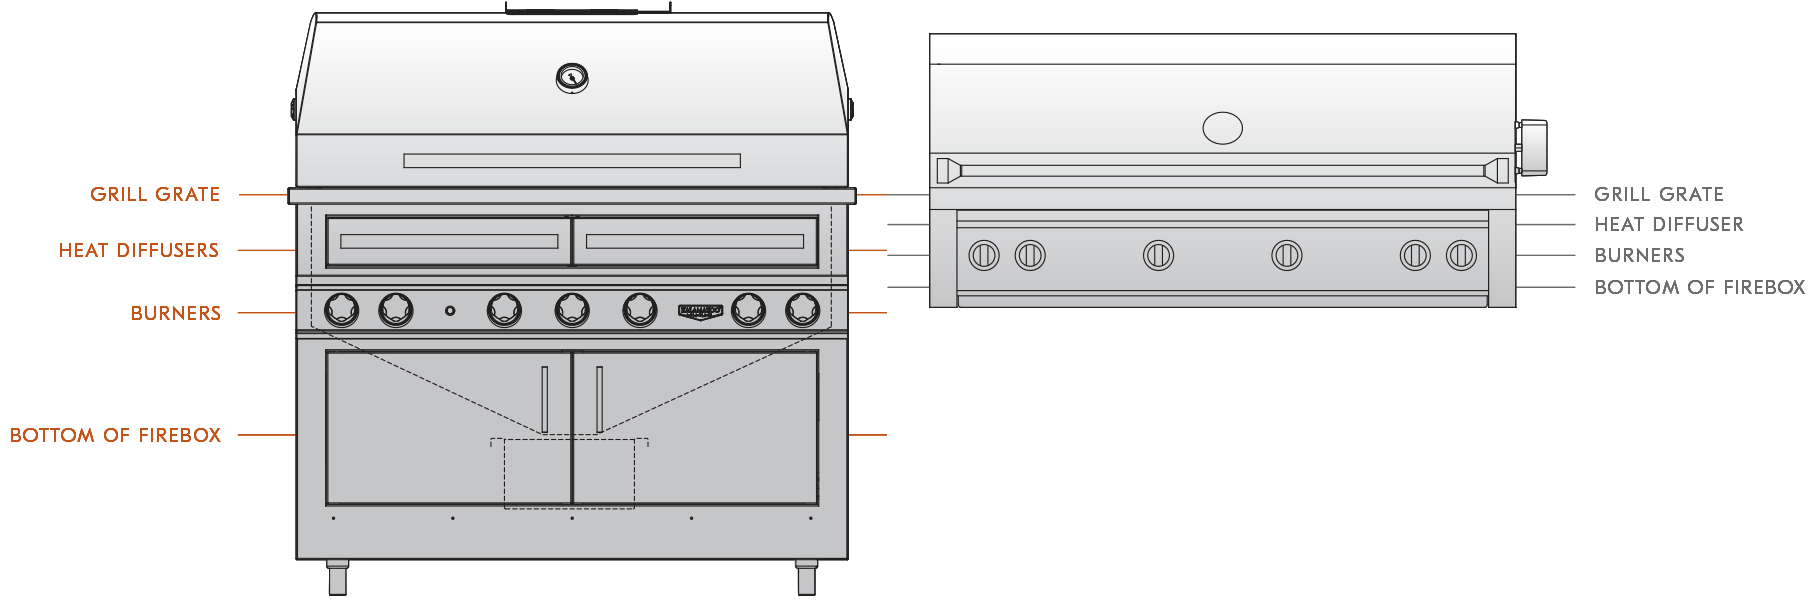 kog-competitor-grill-comparison-k1000.png